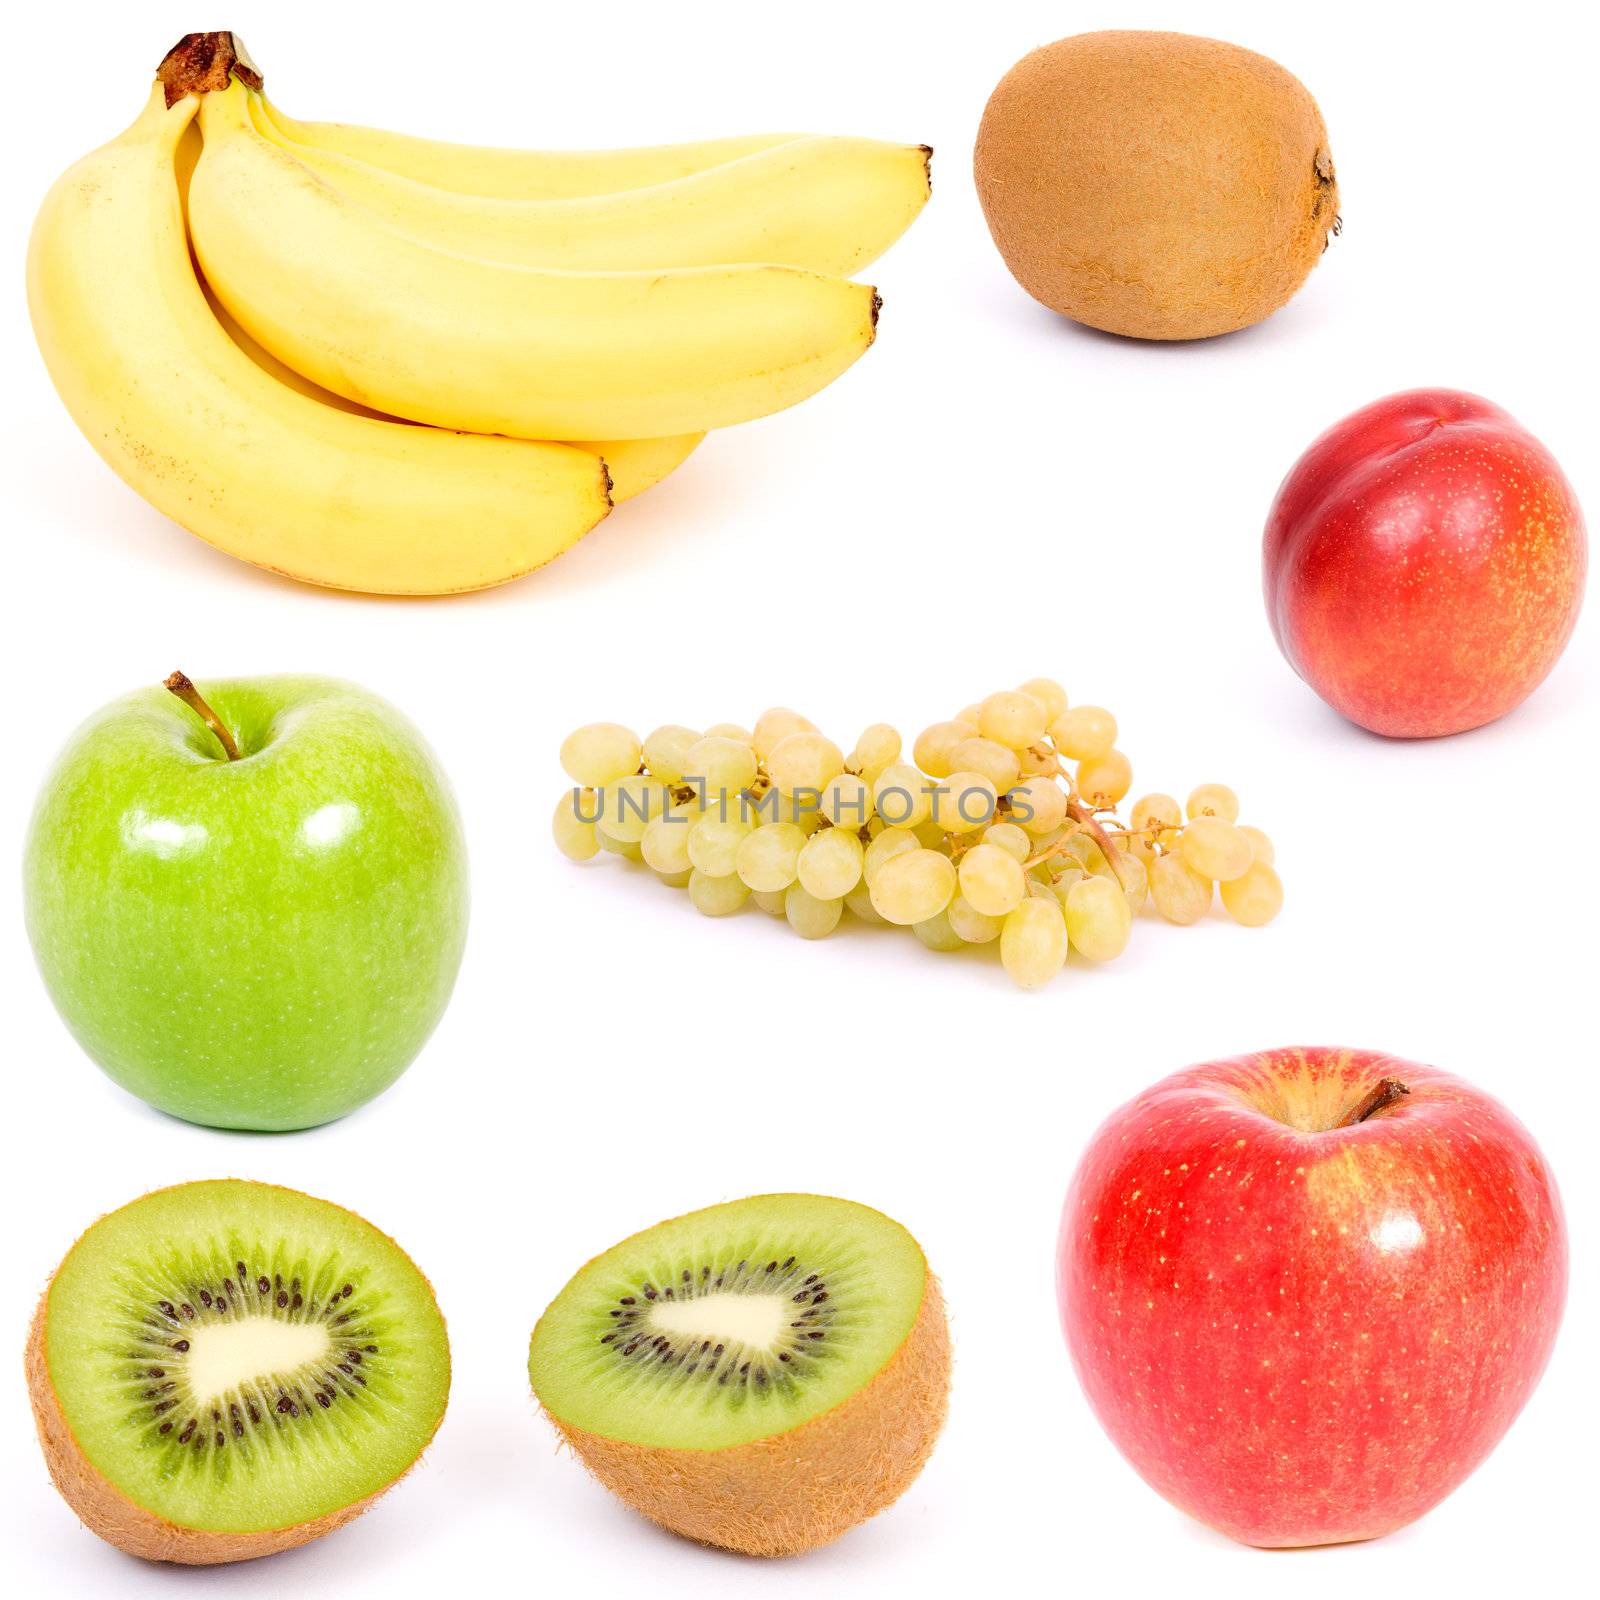 Mixed fruits: apples, kiwis, peach, bananas and grape